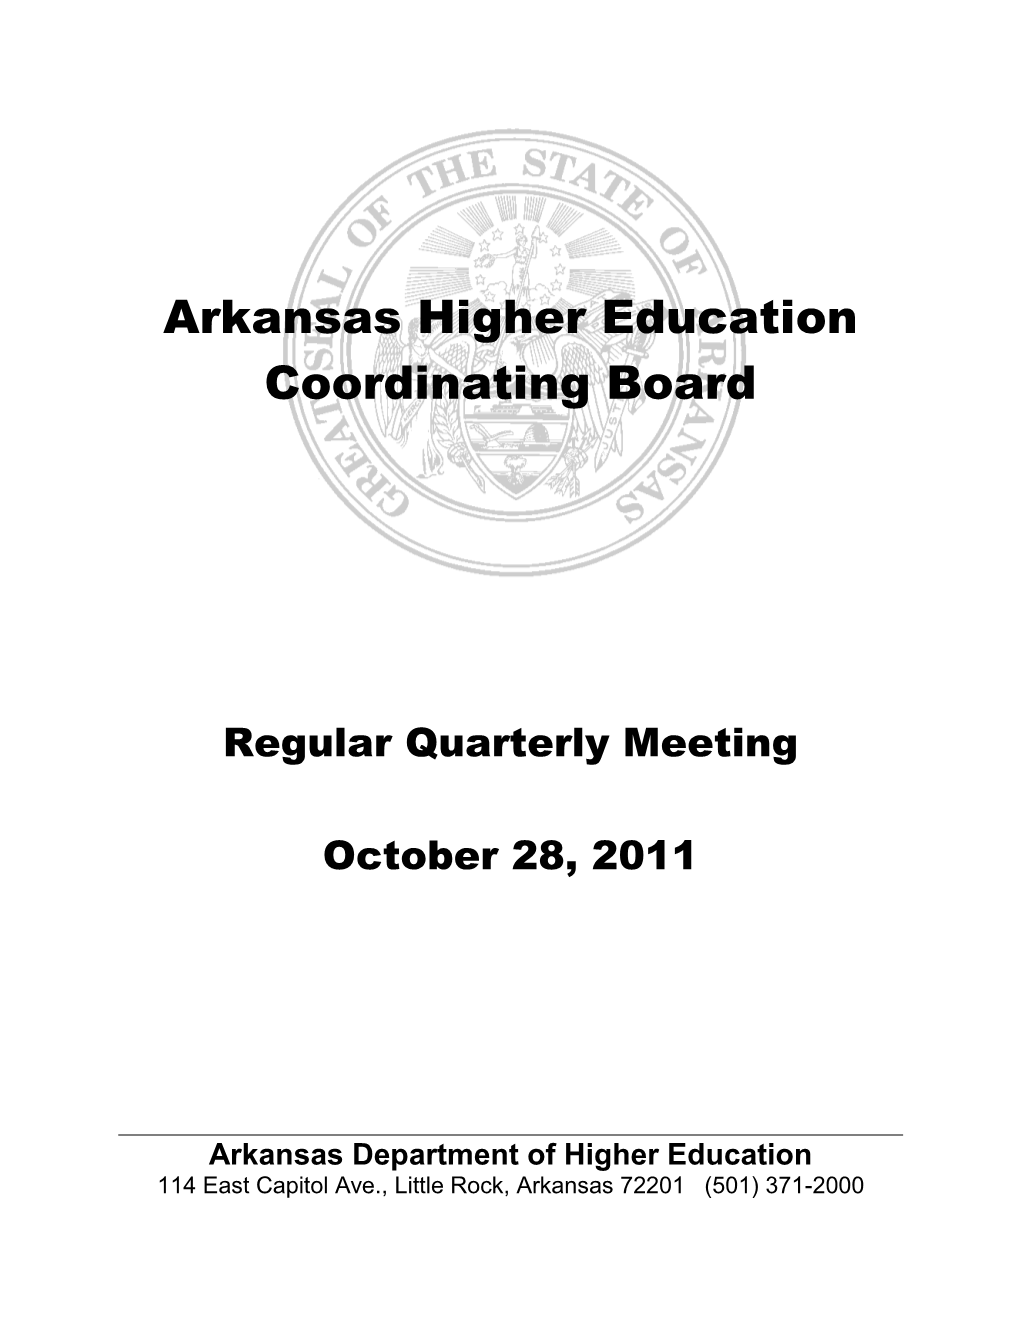 Arkansas Higher Education Coordinating Board